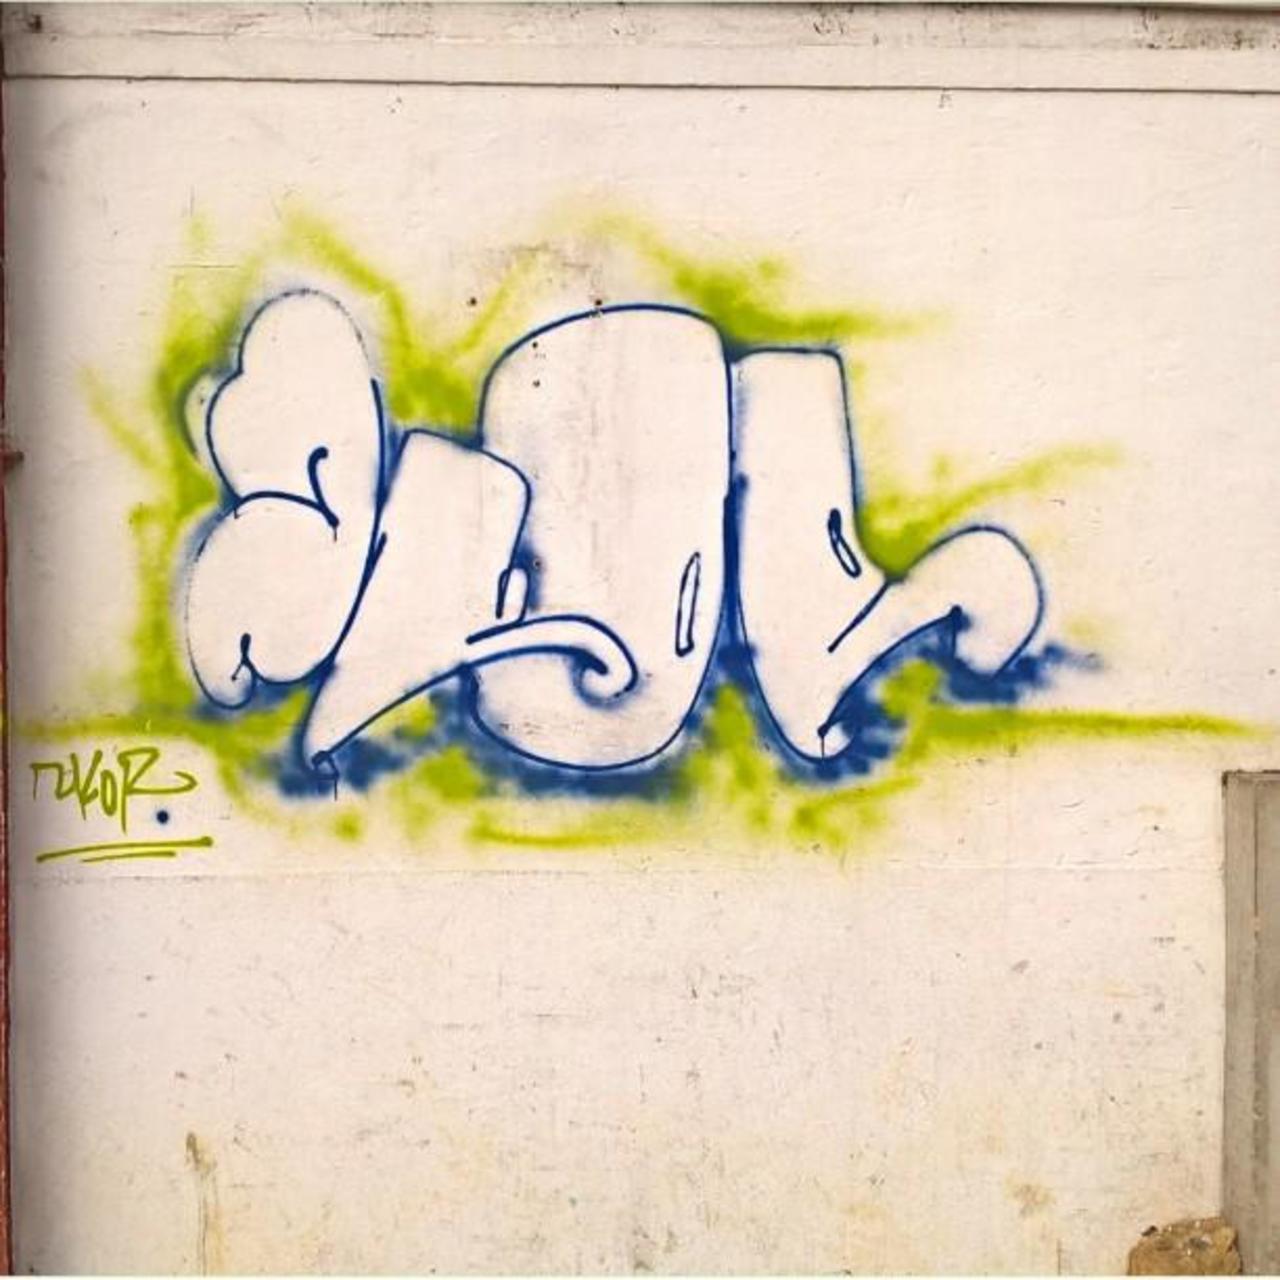 #Paris #graffiti photo by @maxdimontemarciano http://ift.tt/1GmeYIW #StreetArt https://t.co/CFMT8OmMxh